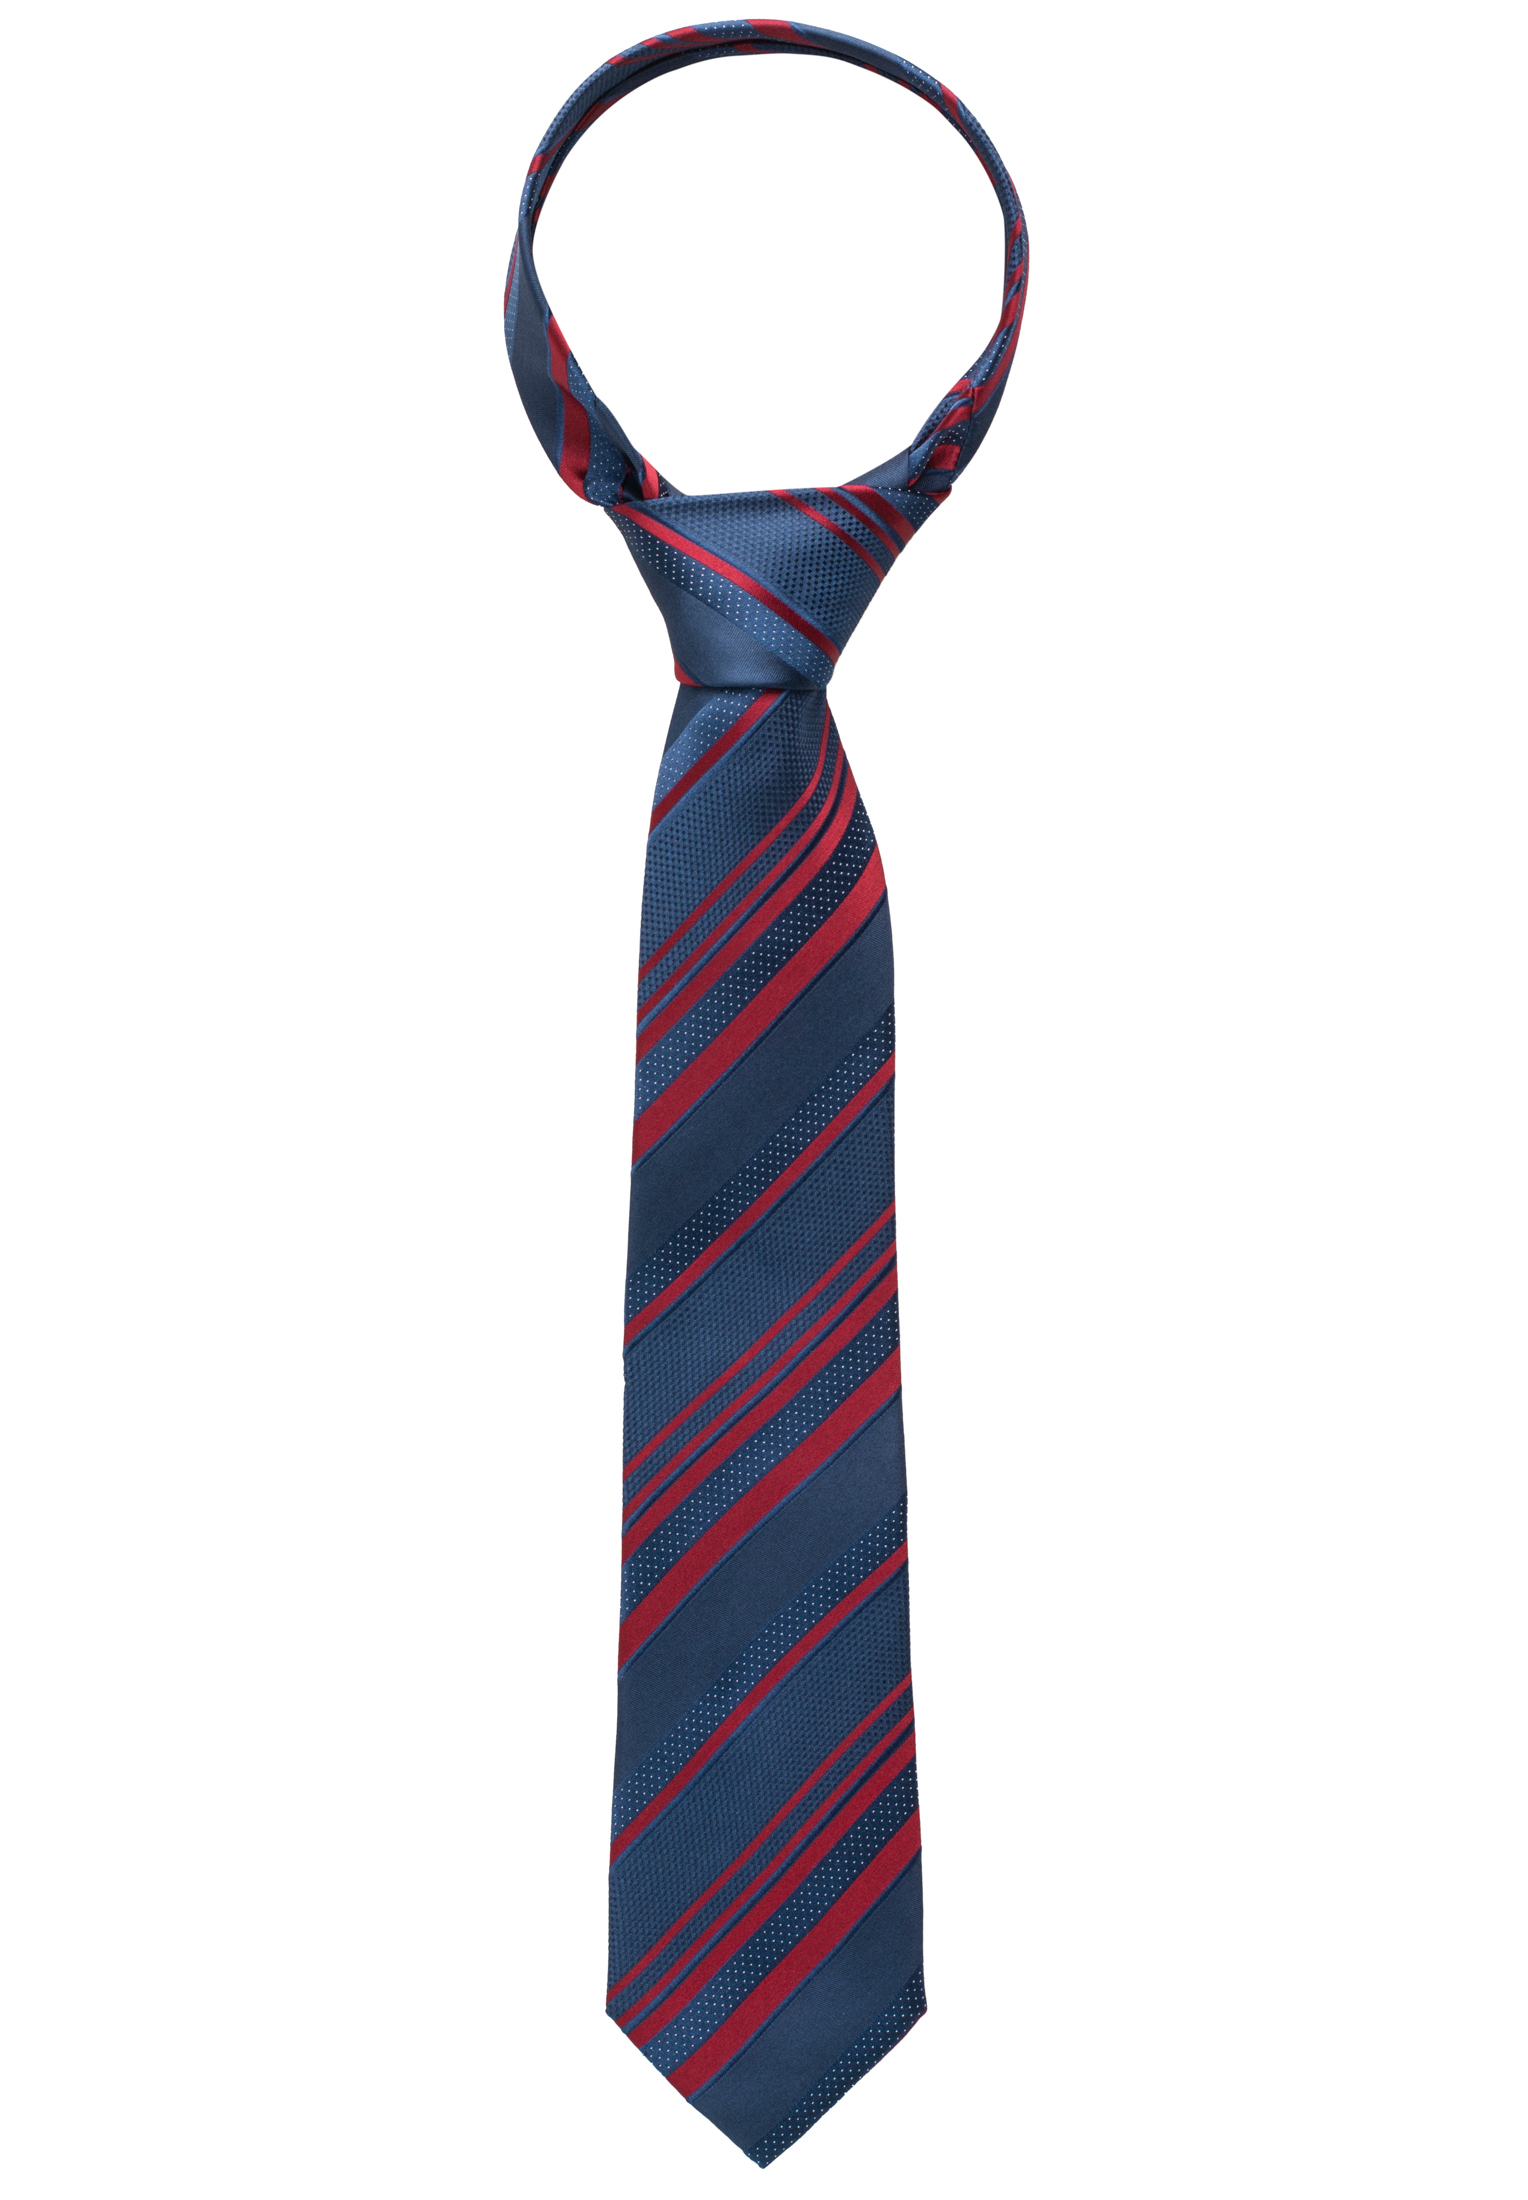 Krawatte in | navy gestreift 1AC00408-01-91-142 | navy 142 